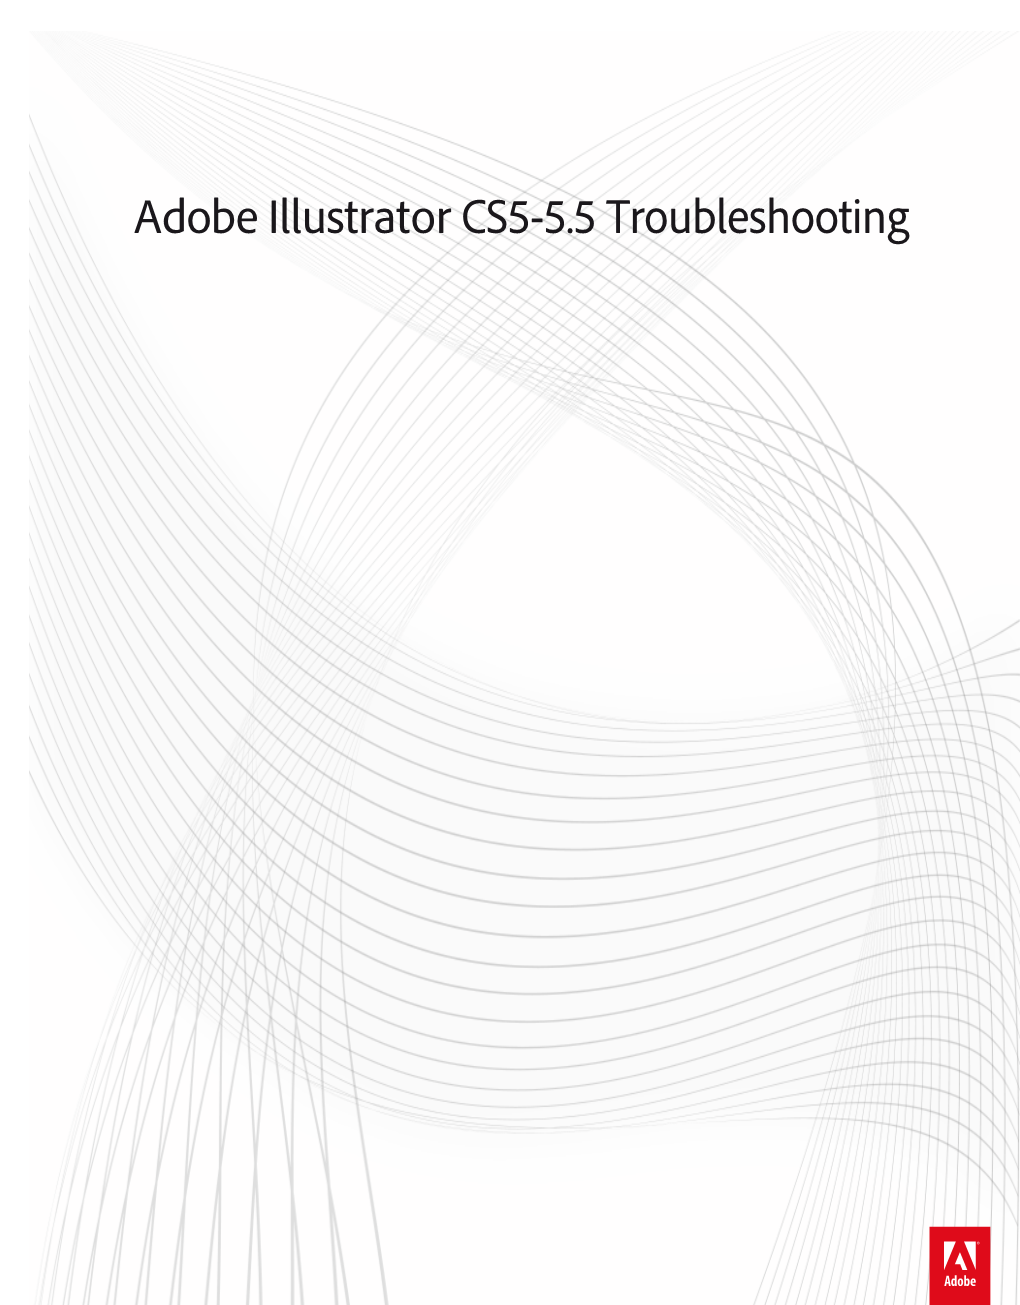 Adobe Illustrator CS5-5.5 Troubleshooting Legal Notices